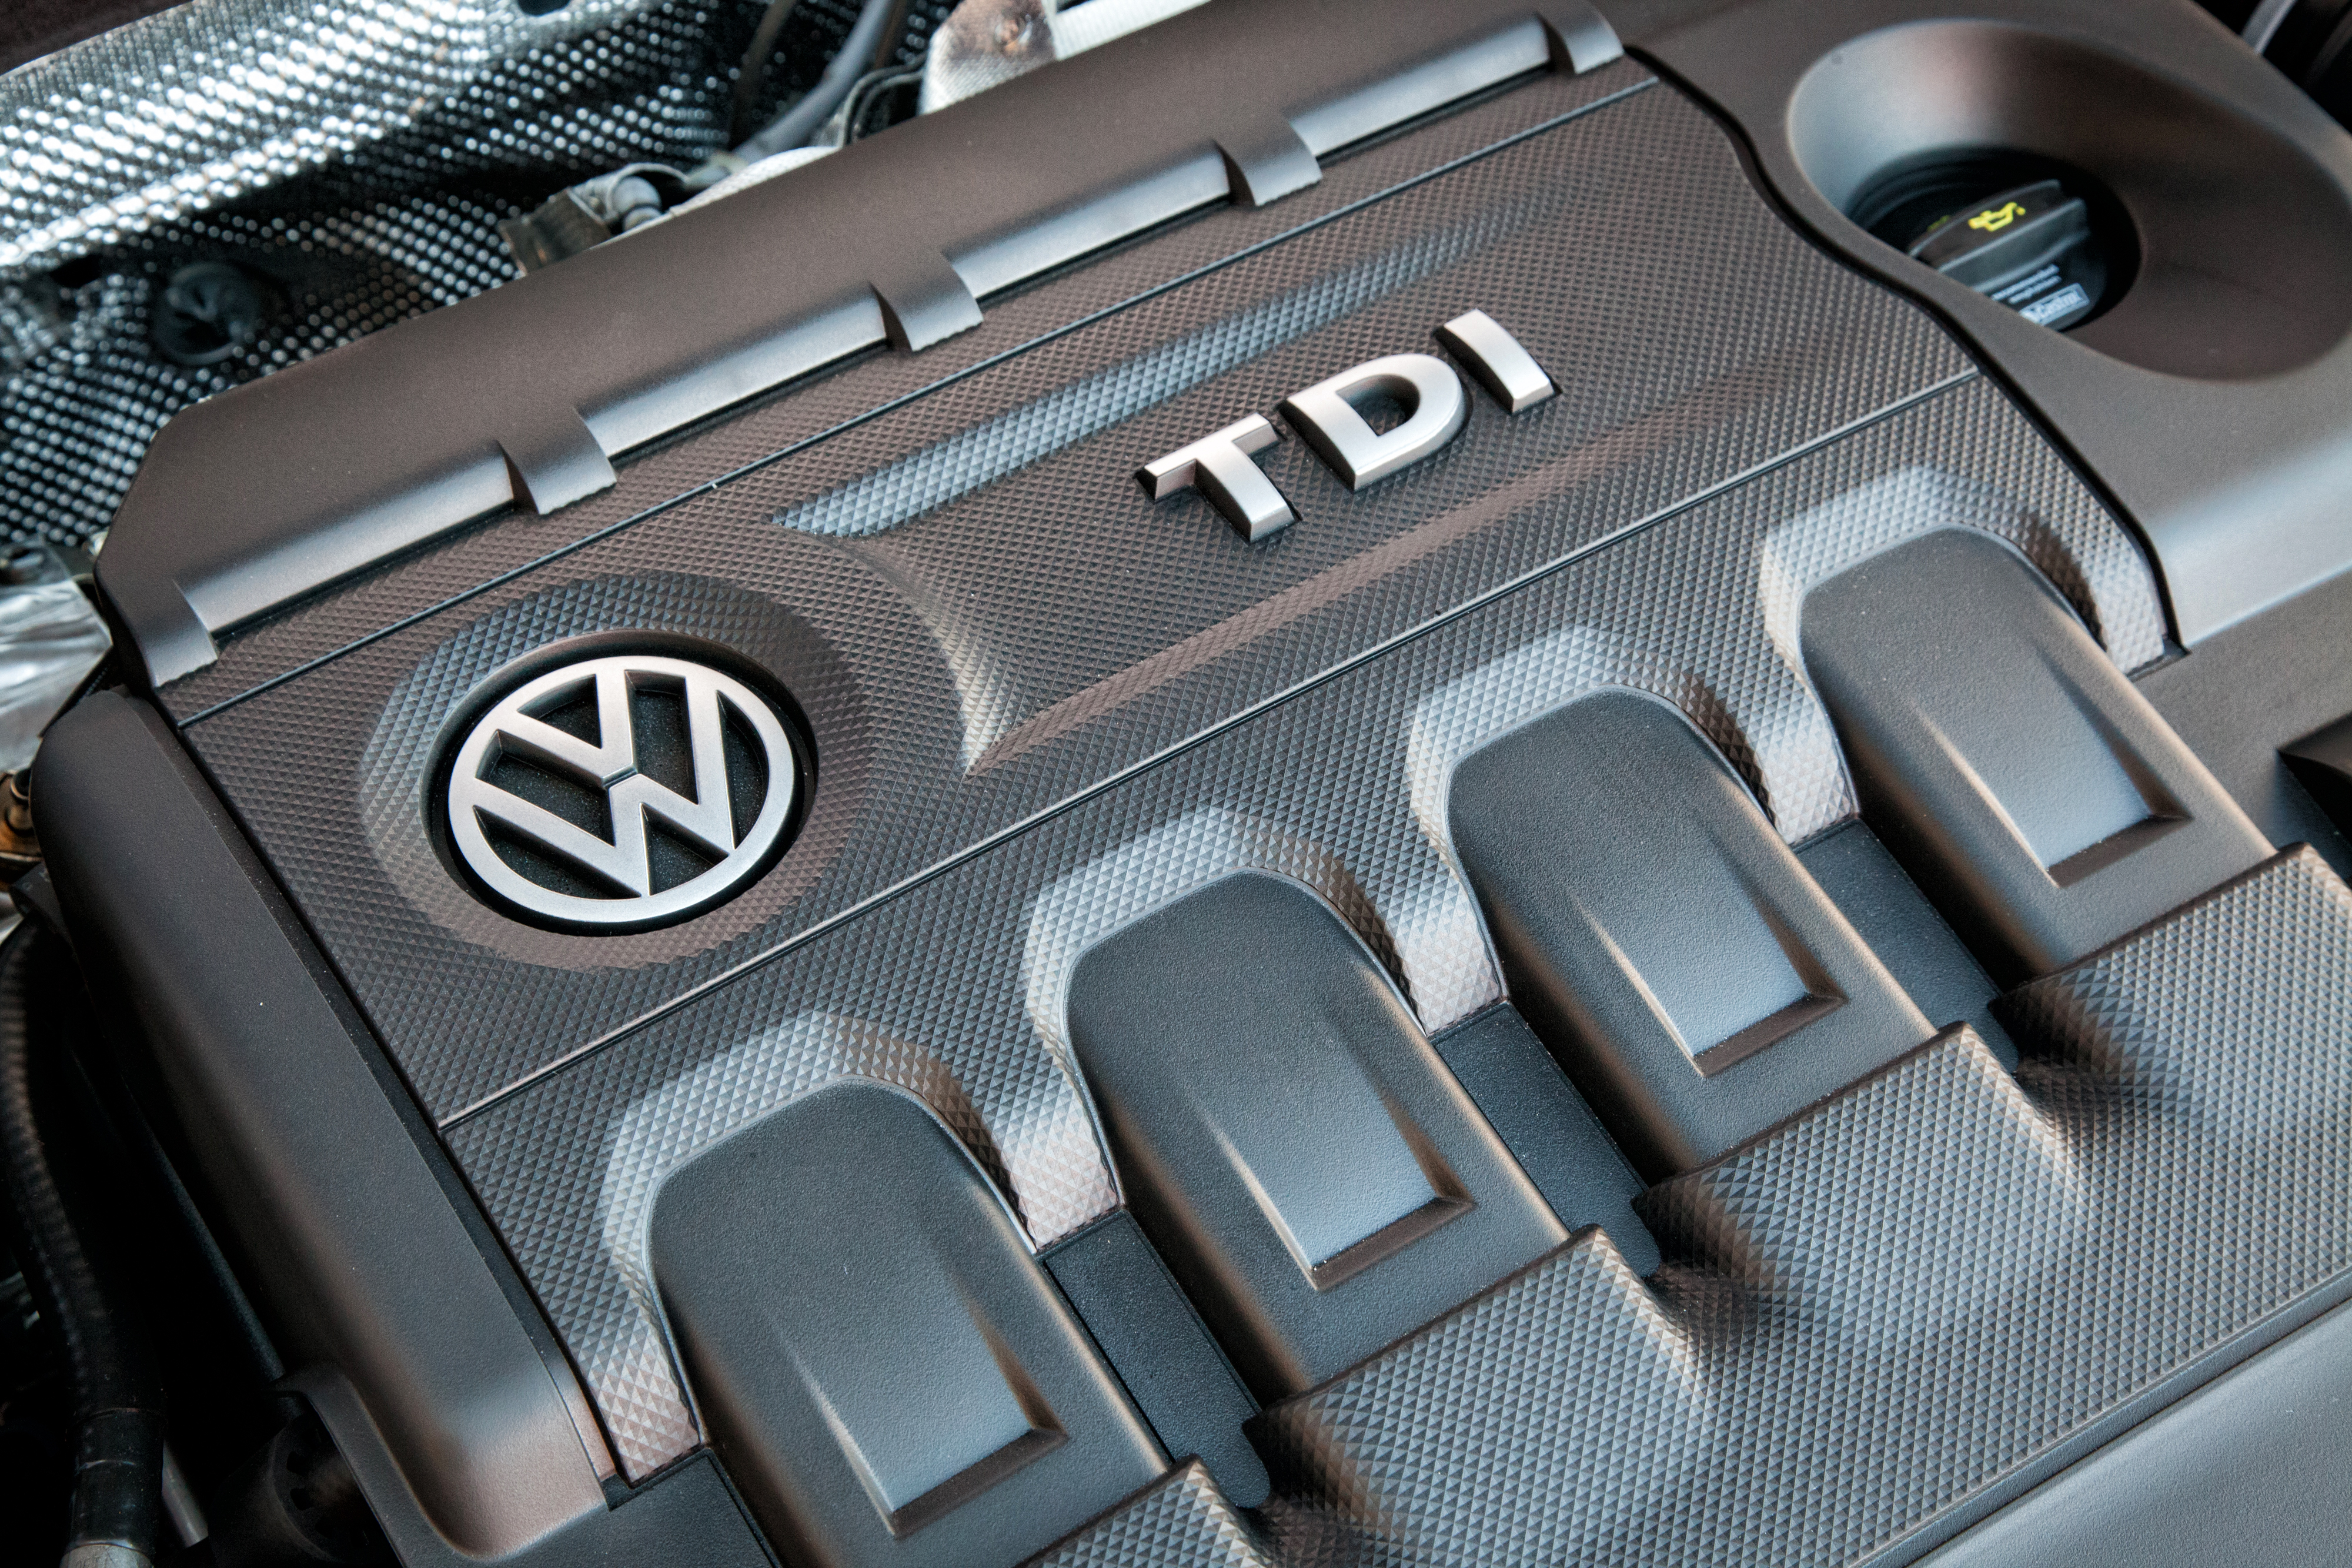 VW ending its push for diesel dominance